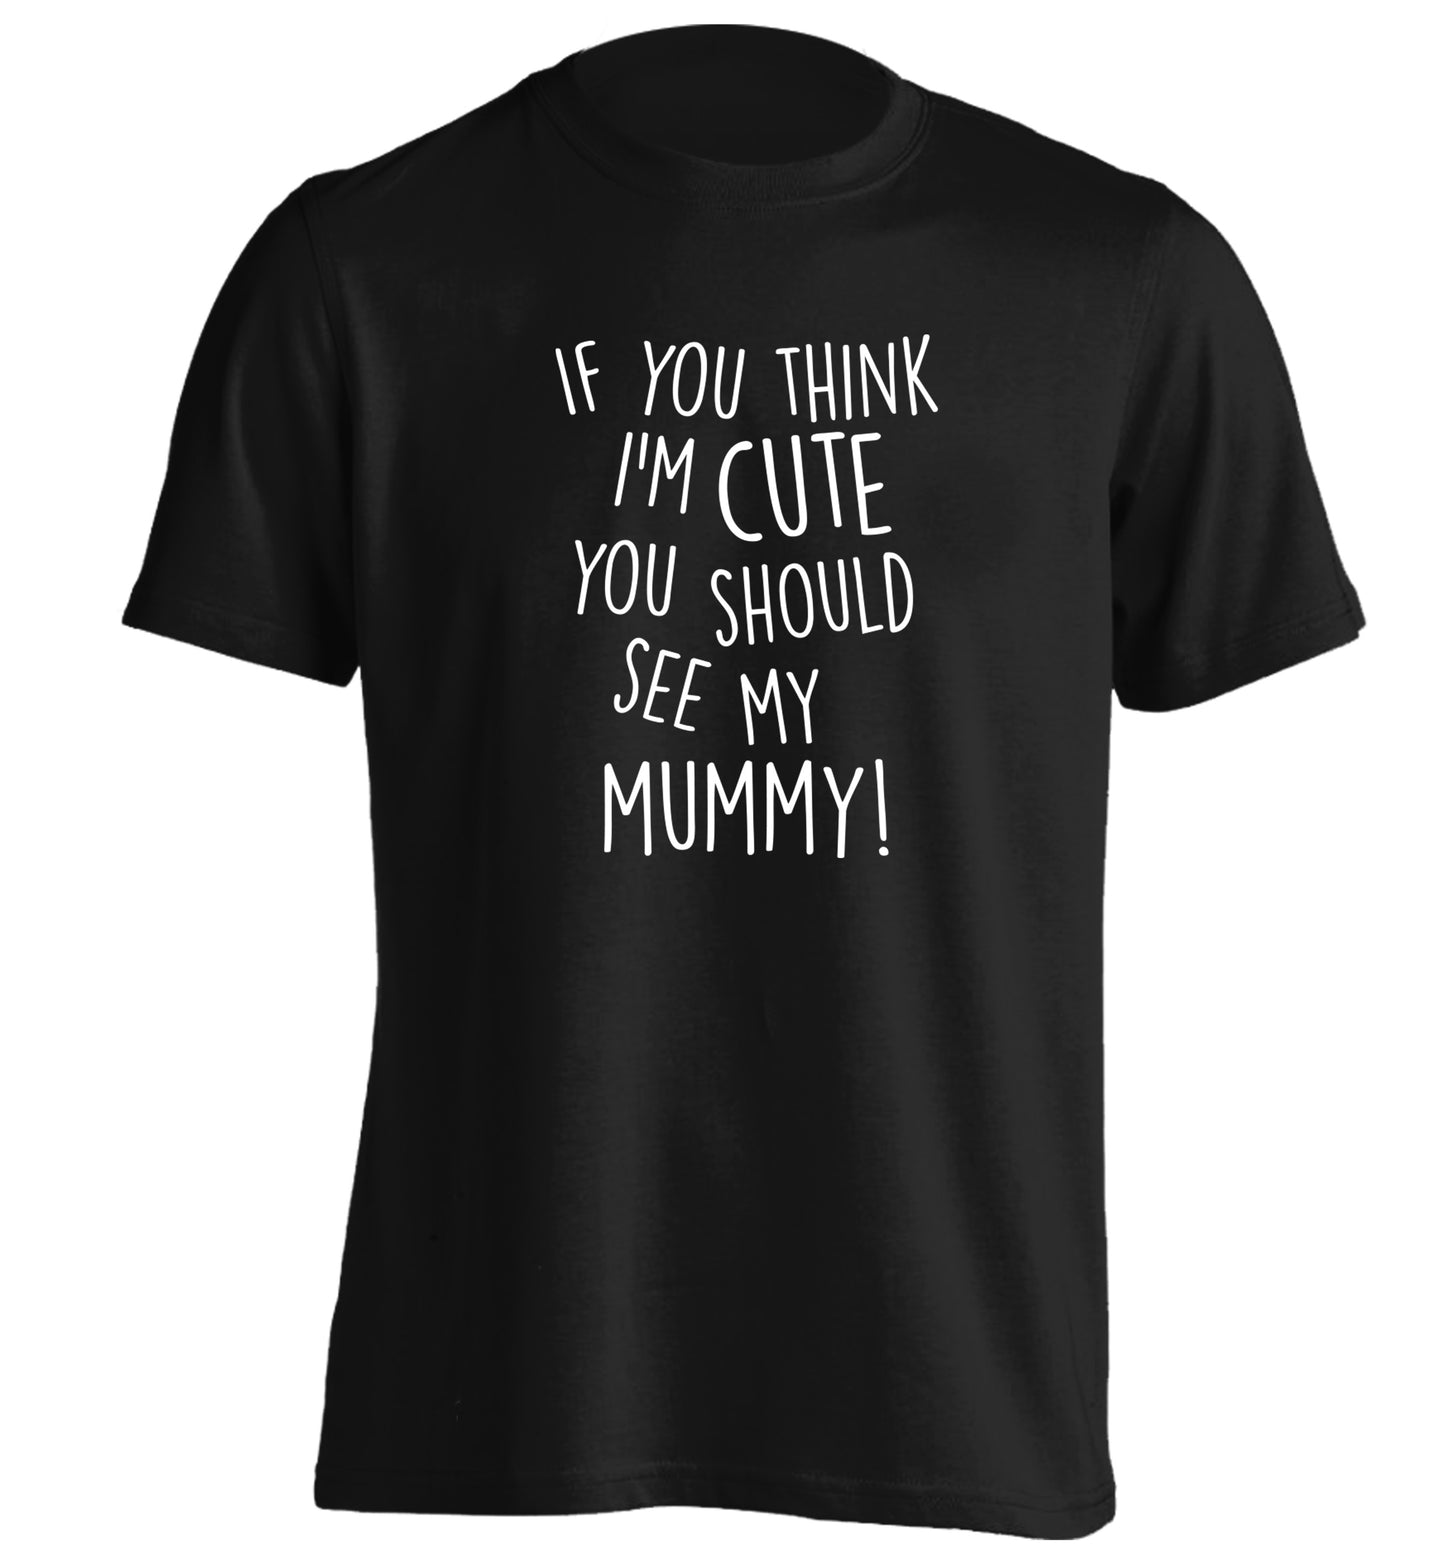 If you think I'm cute you should see my mummy adults unisex black Tshirt 2XL